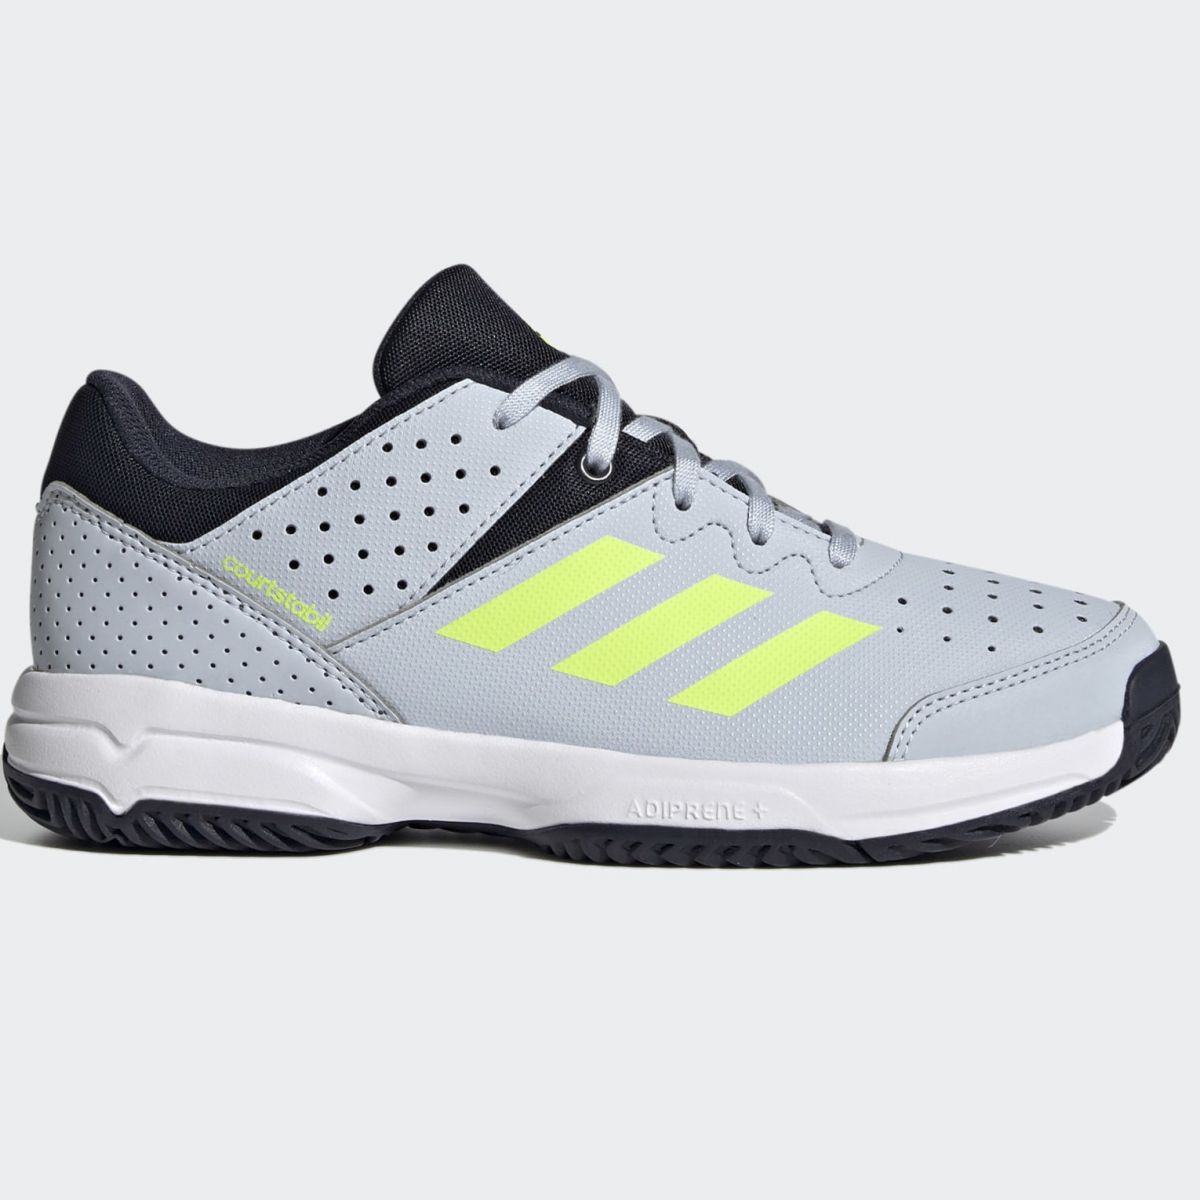 handball shoes online purchase